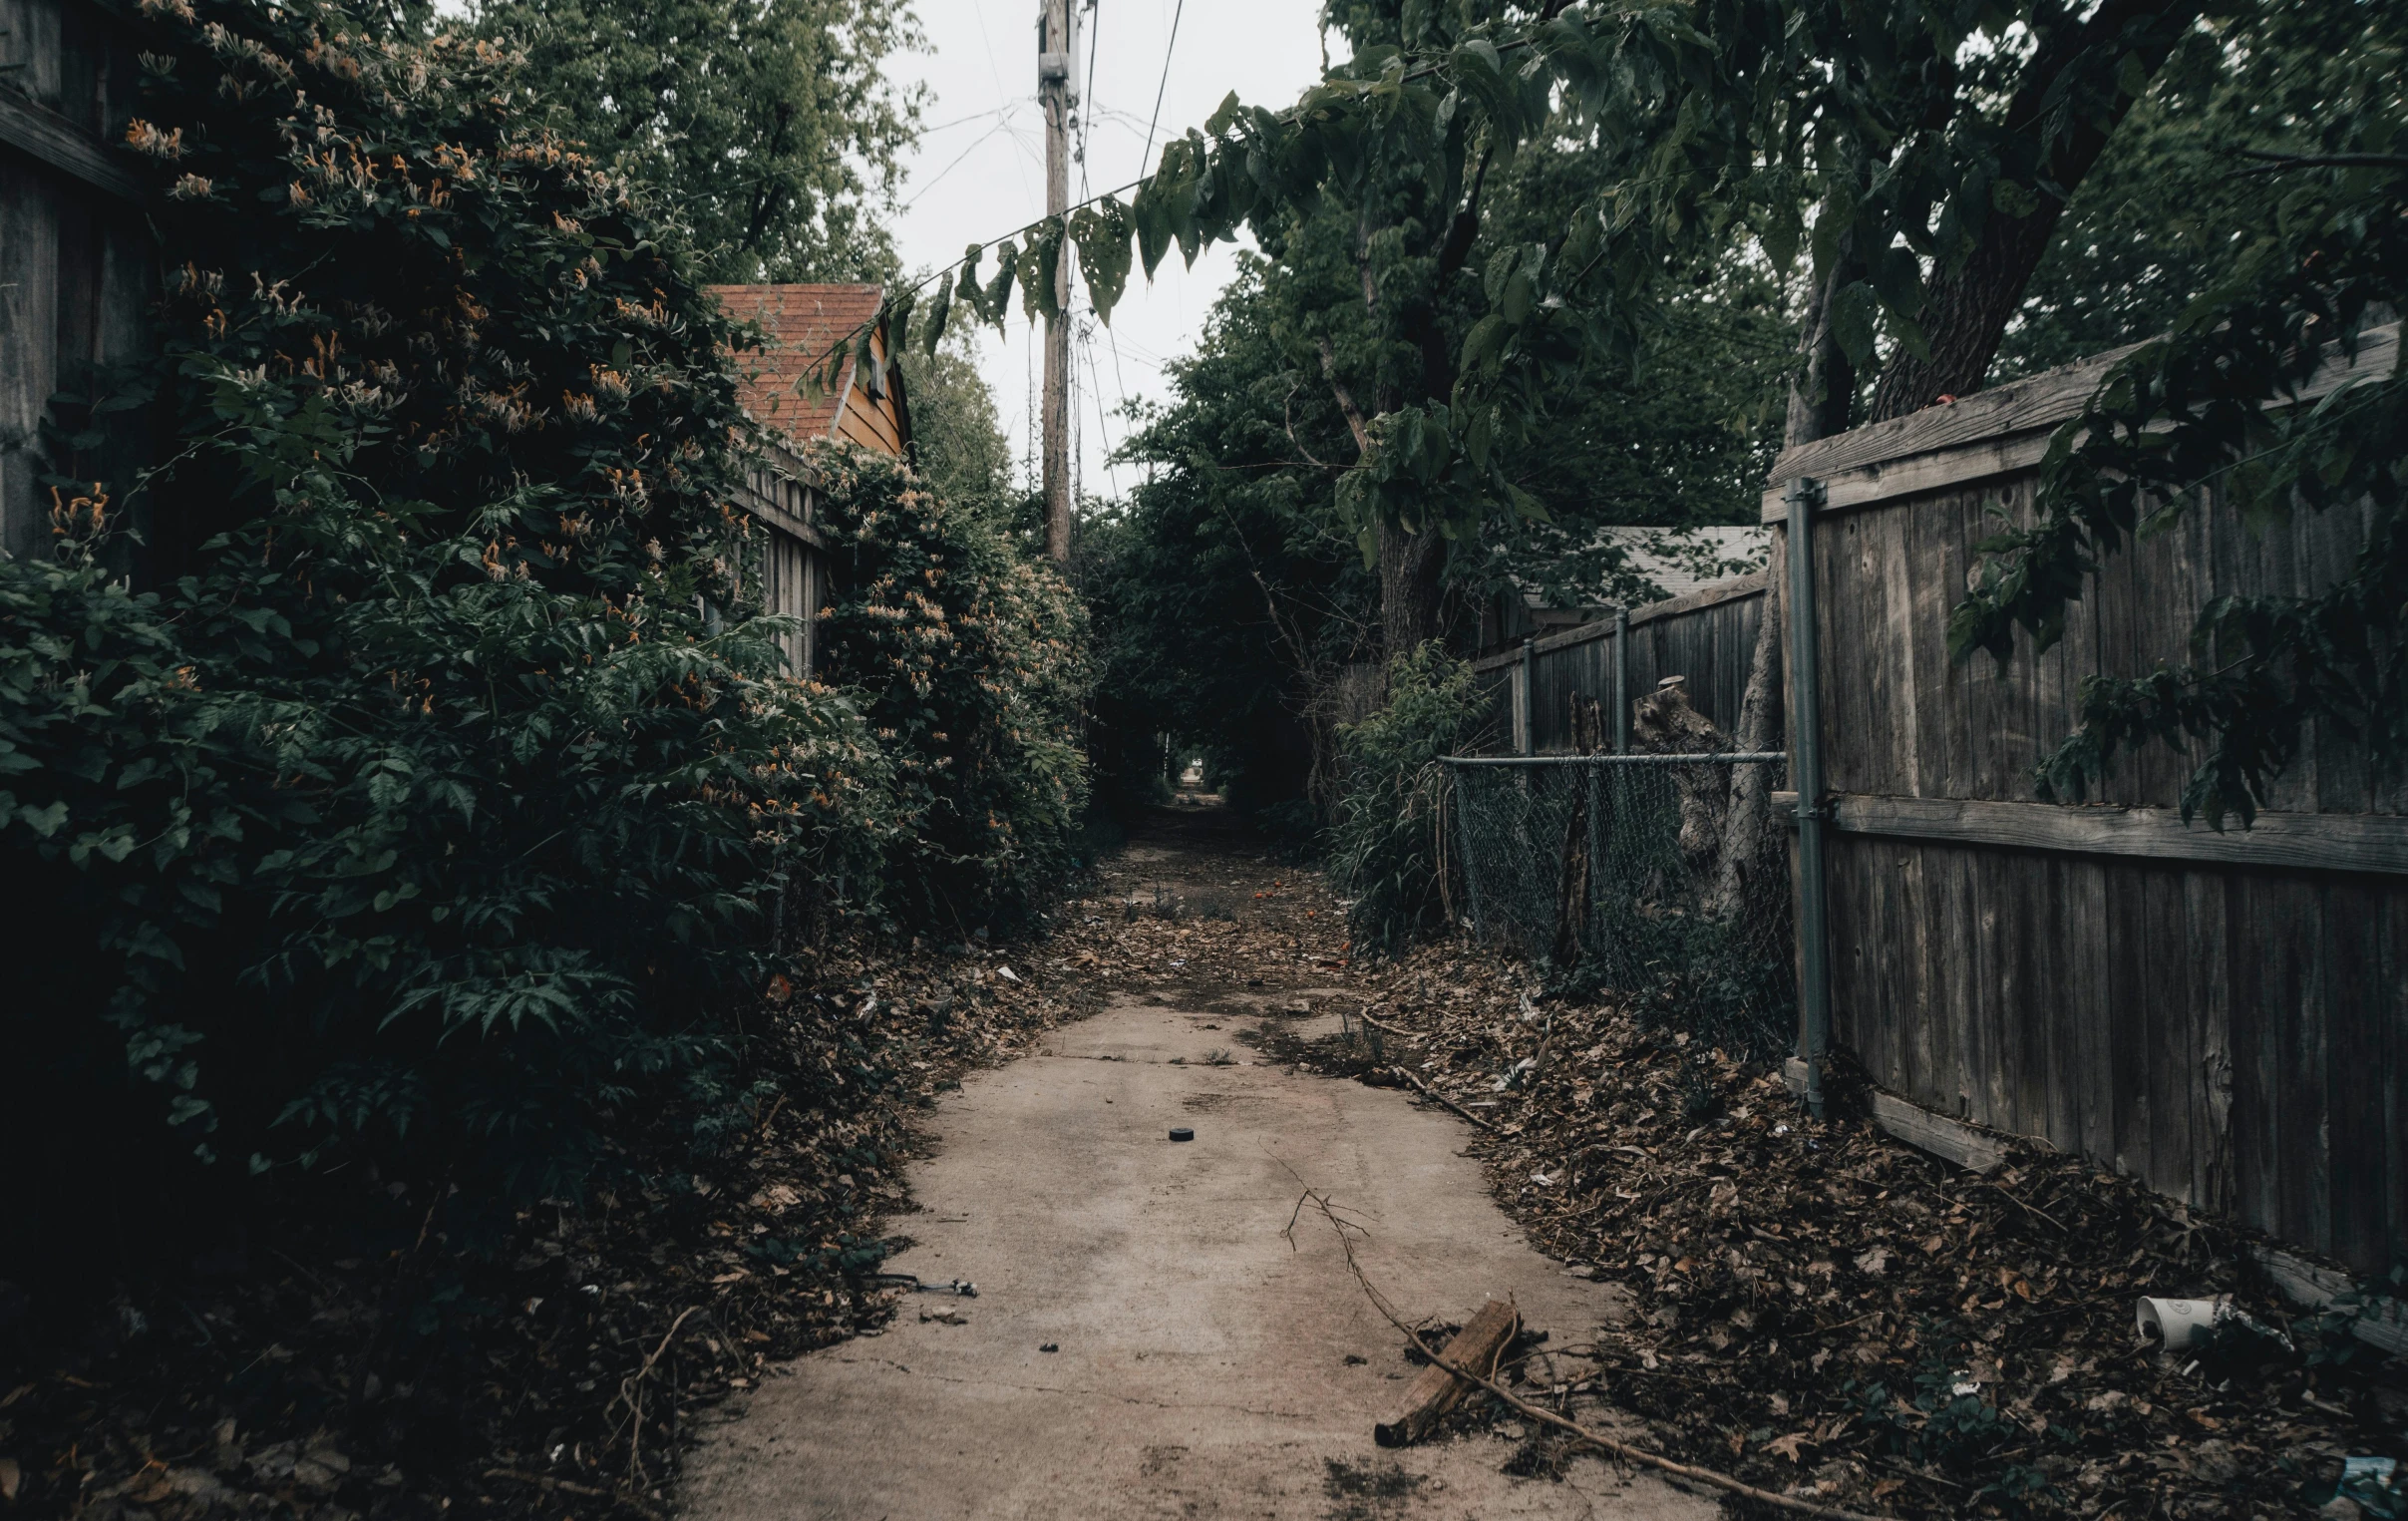 a dirt path in an old, overgrown neighborhood